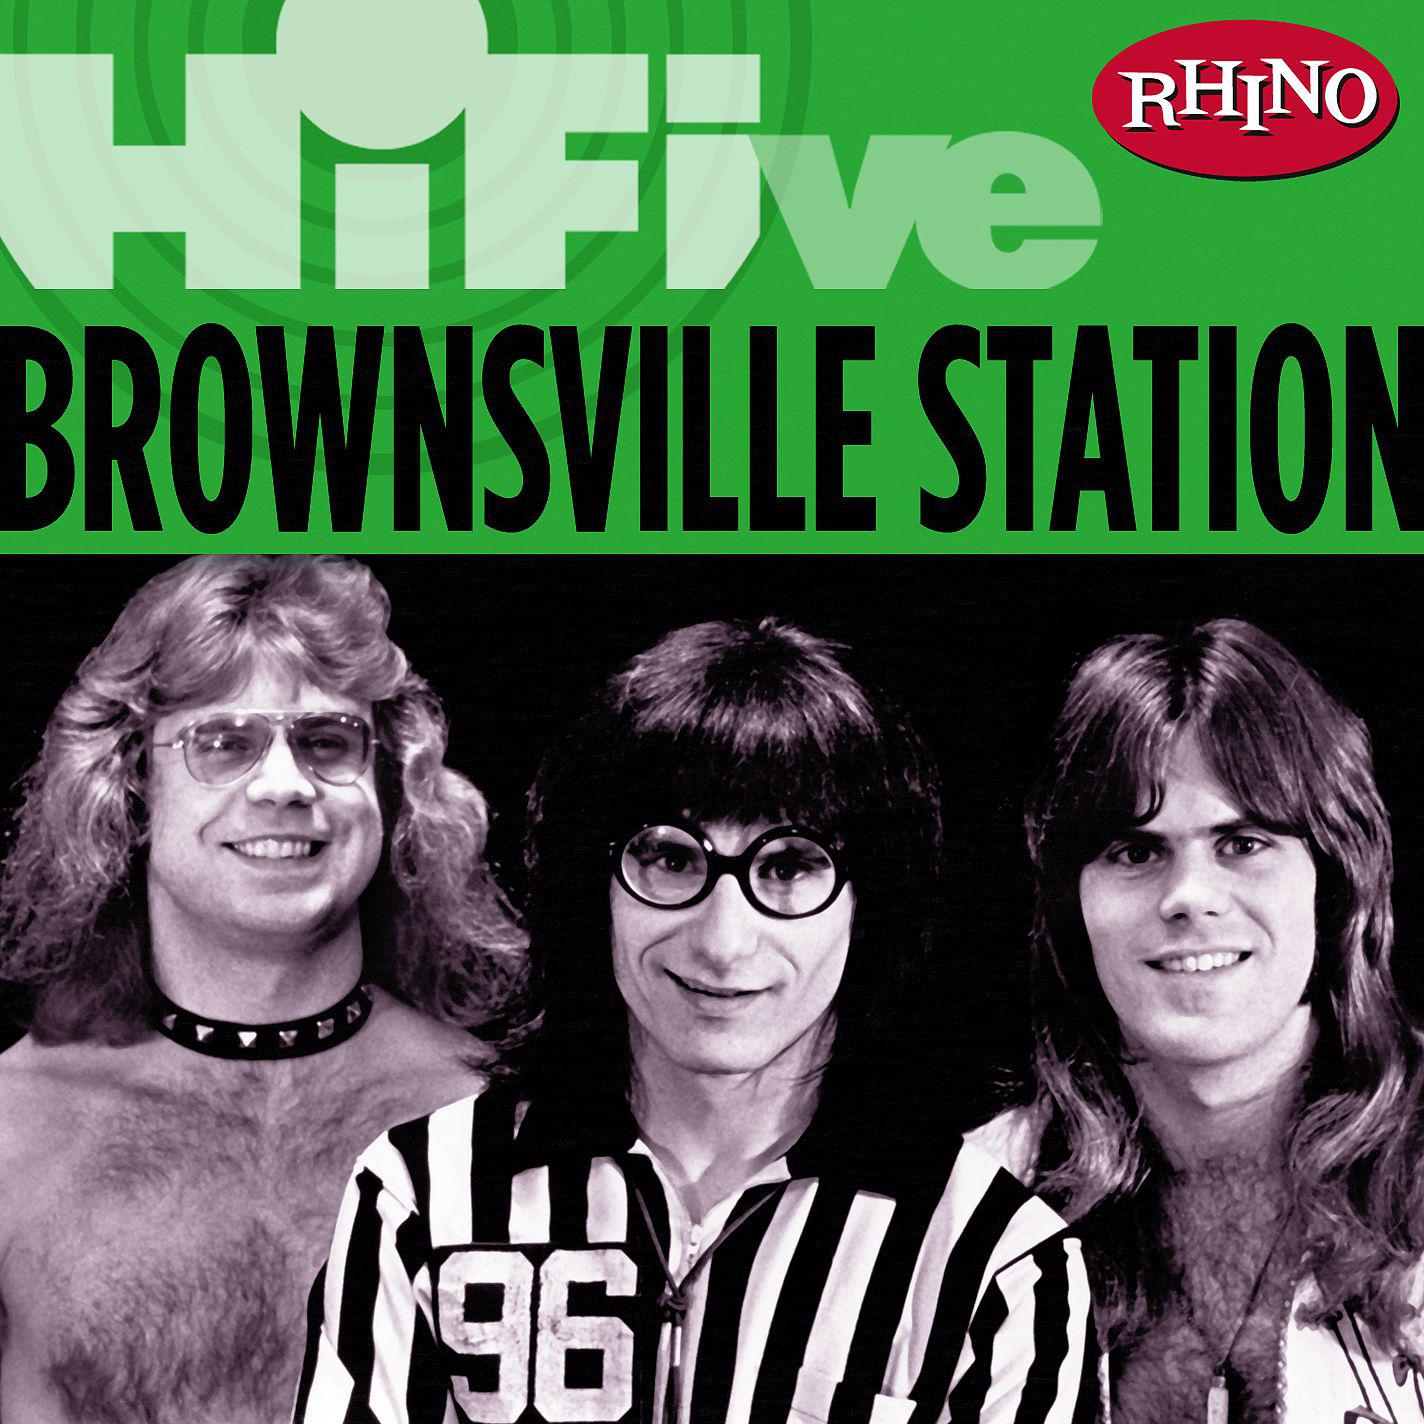 Brownsville Station - Lightnin' Bar Blues